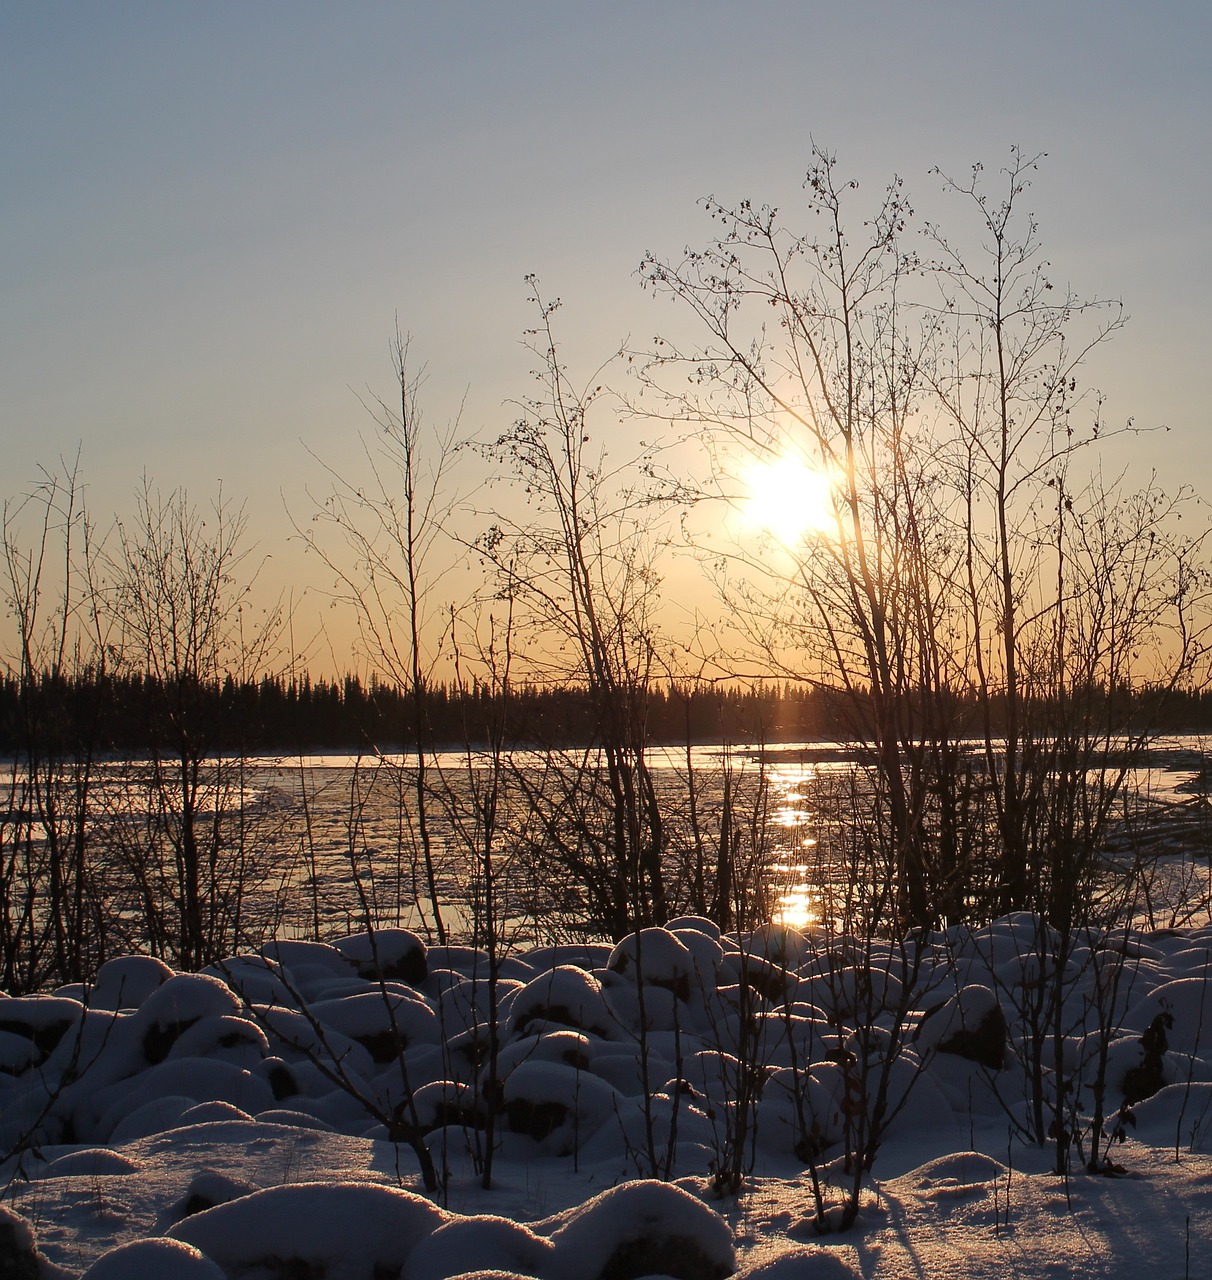 Fairbanks Winter Wonderland: Northern Lights, Dog Sledding, and Local Delights